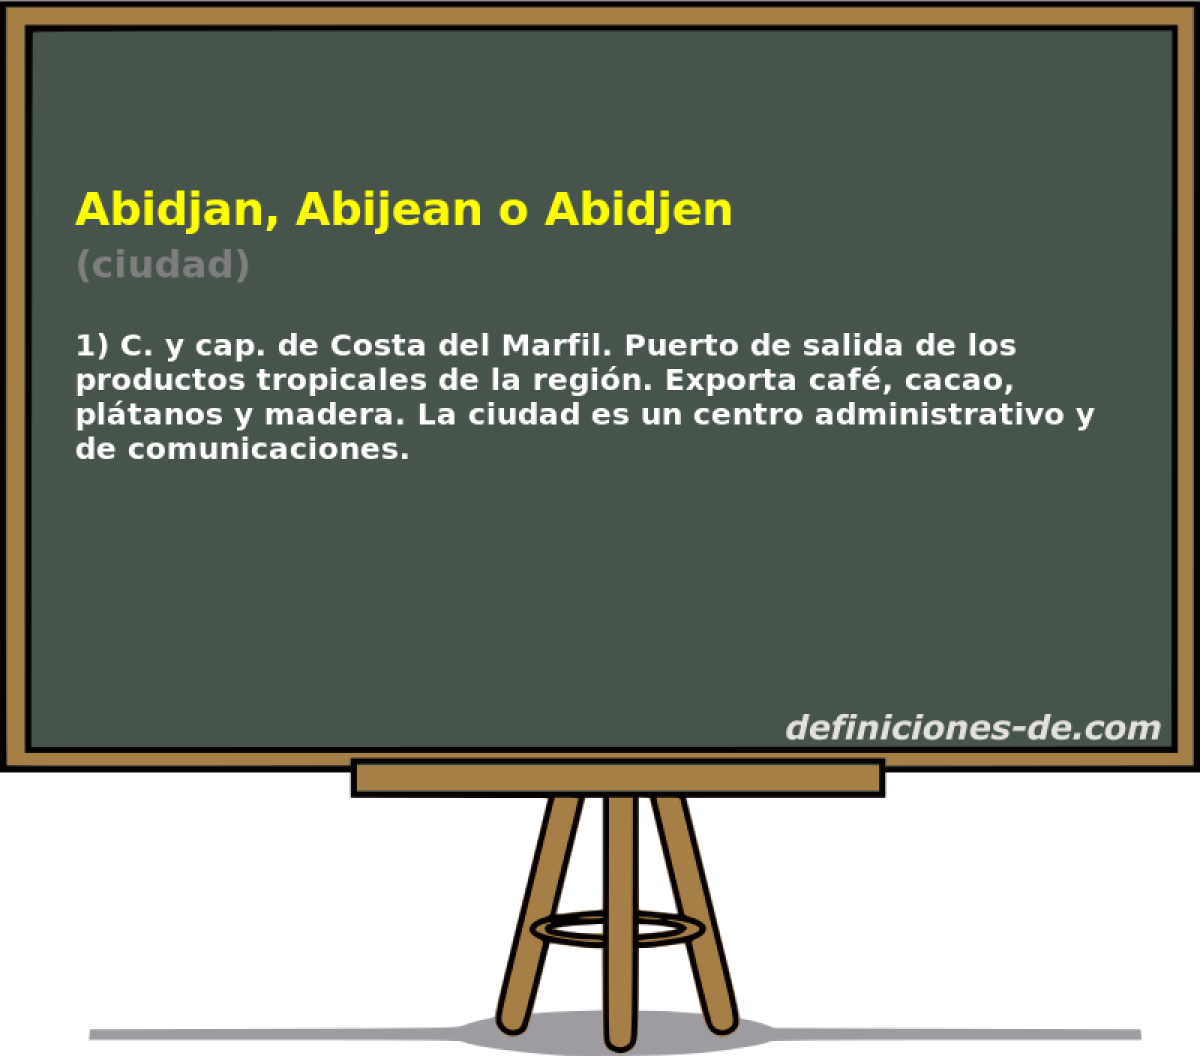 Abidjan, Abijean o Abidjen (ciudad)